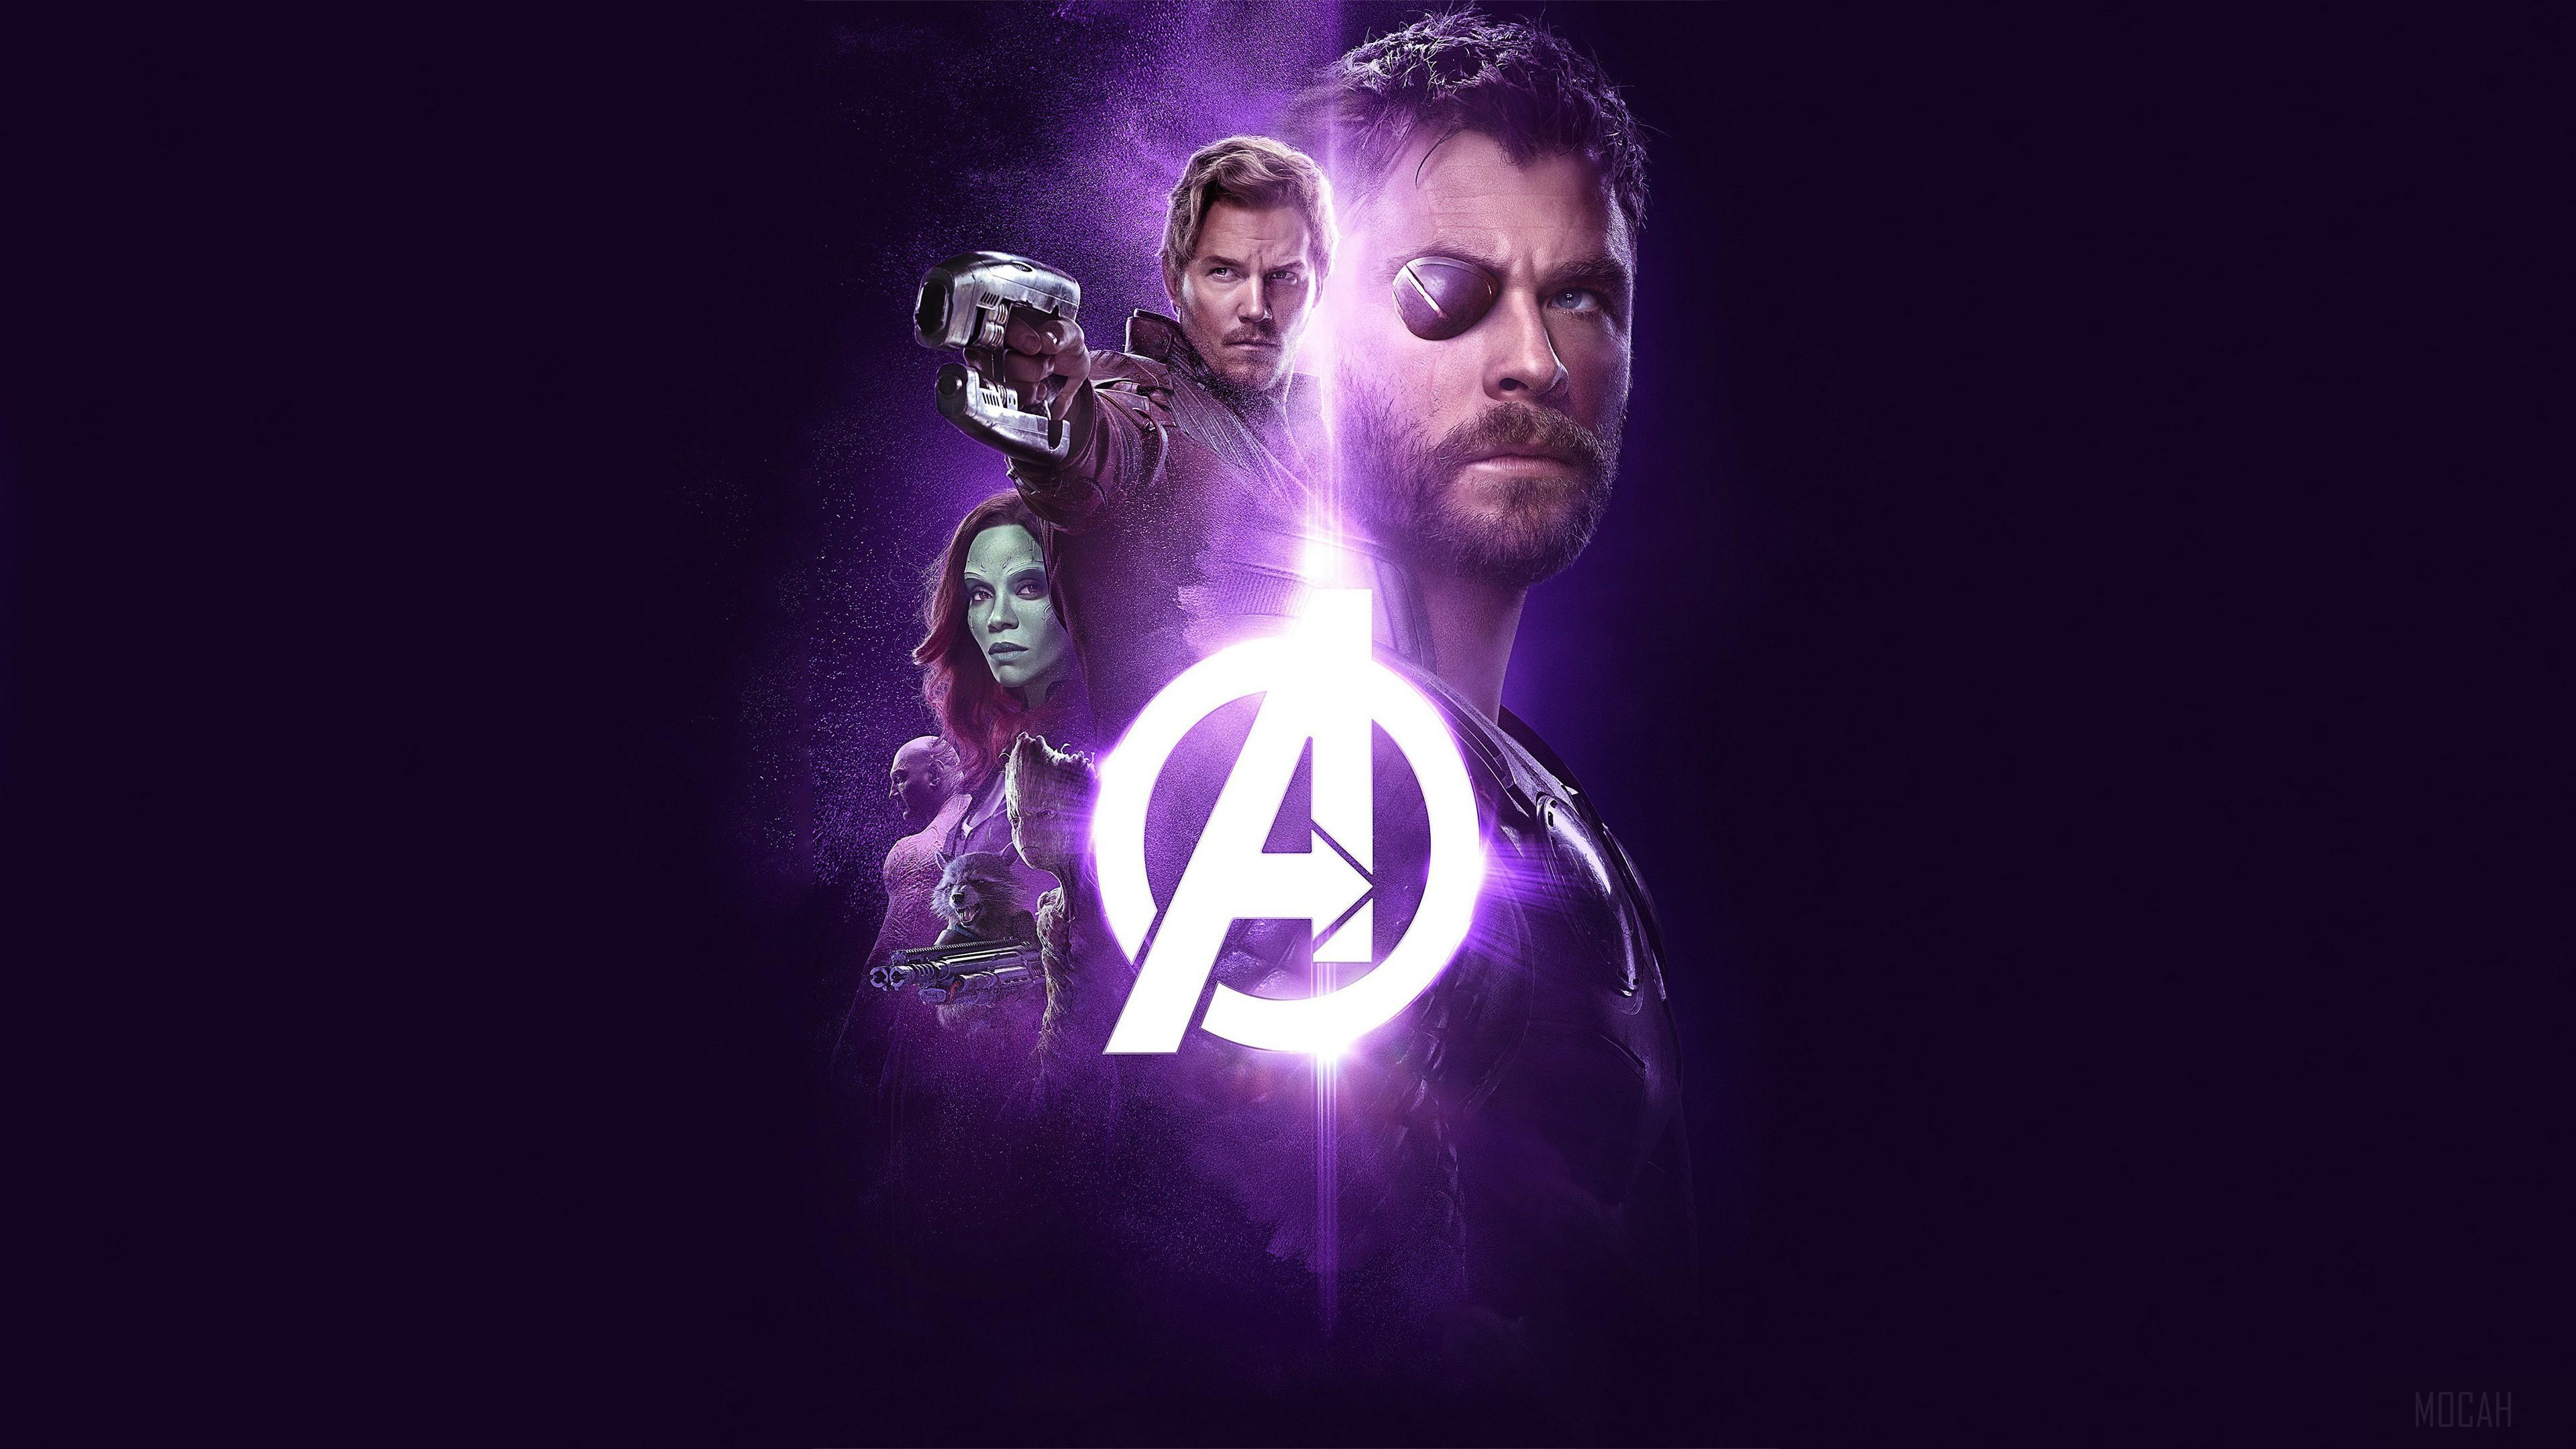 HD wallpaper, Avengers Infinity War Thor Groot Rocket Star Lord Gamora 4K